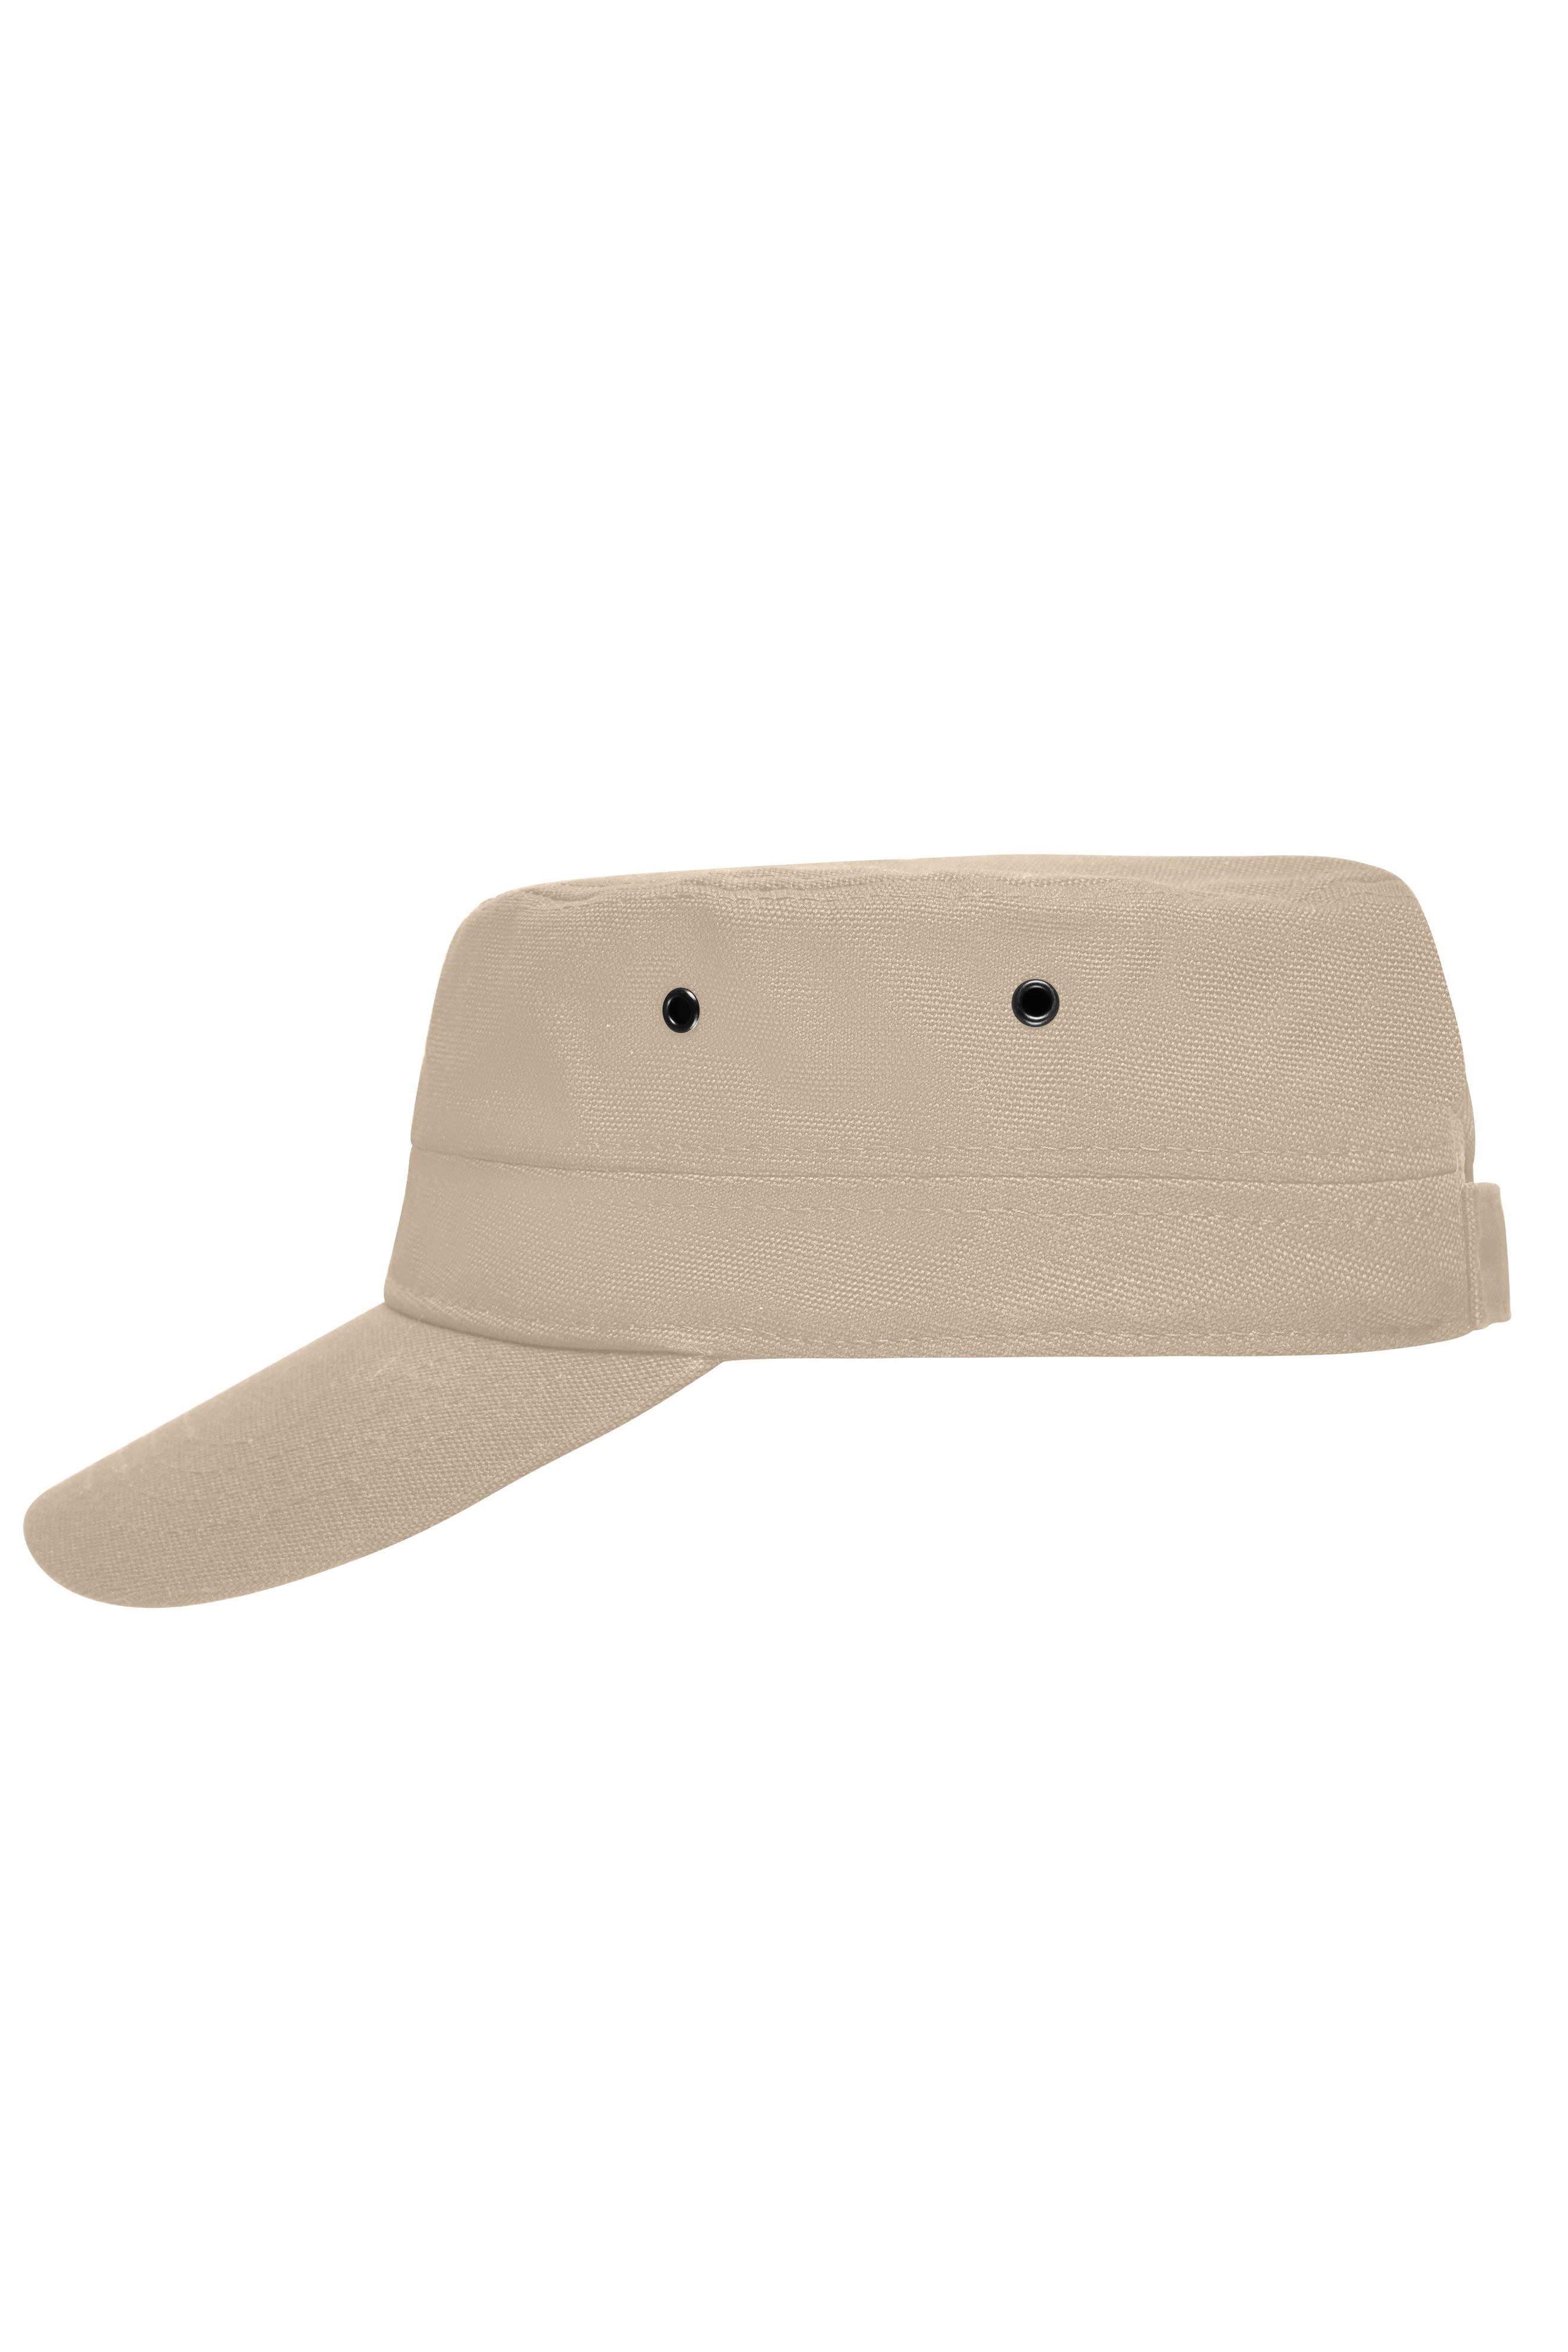 Military Cap for Kids MB7018 Trendige Cap im Military-Stil aus robuster Baumwolle